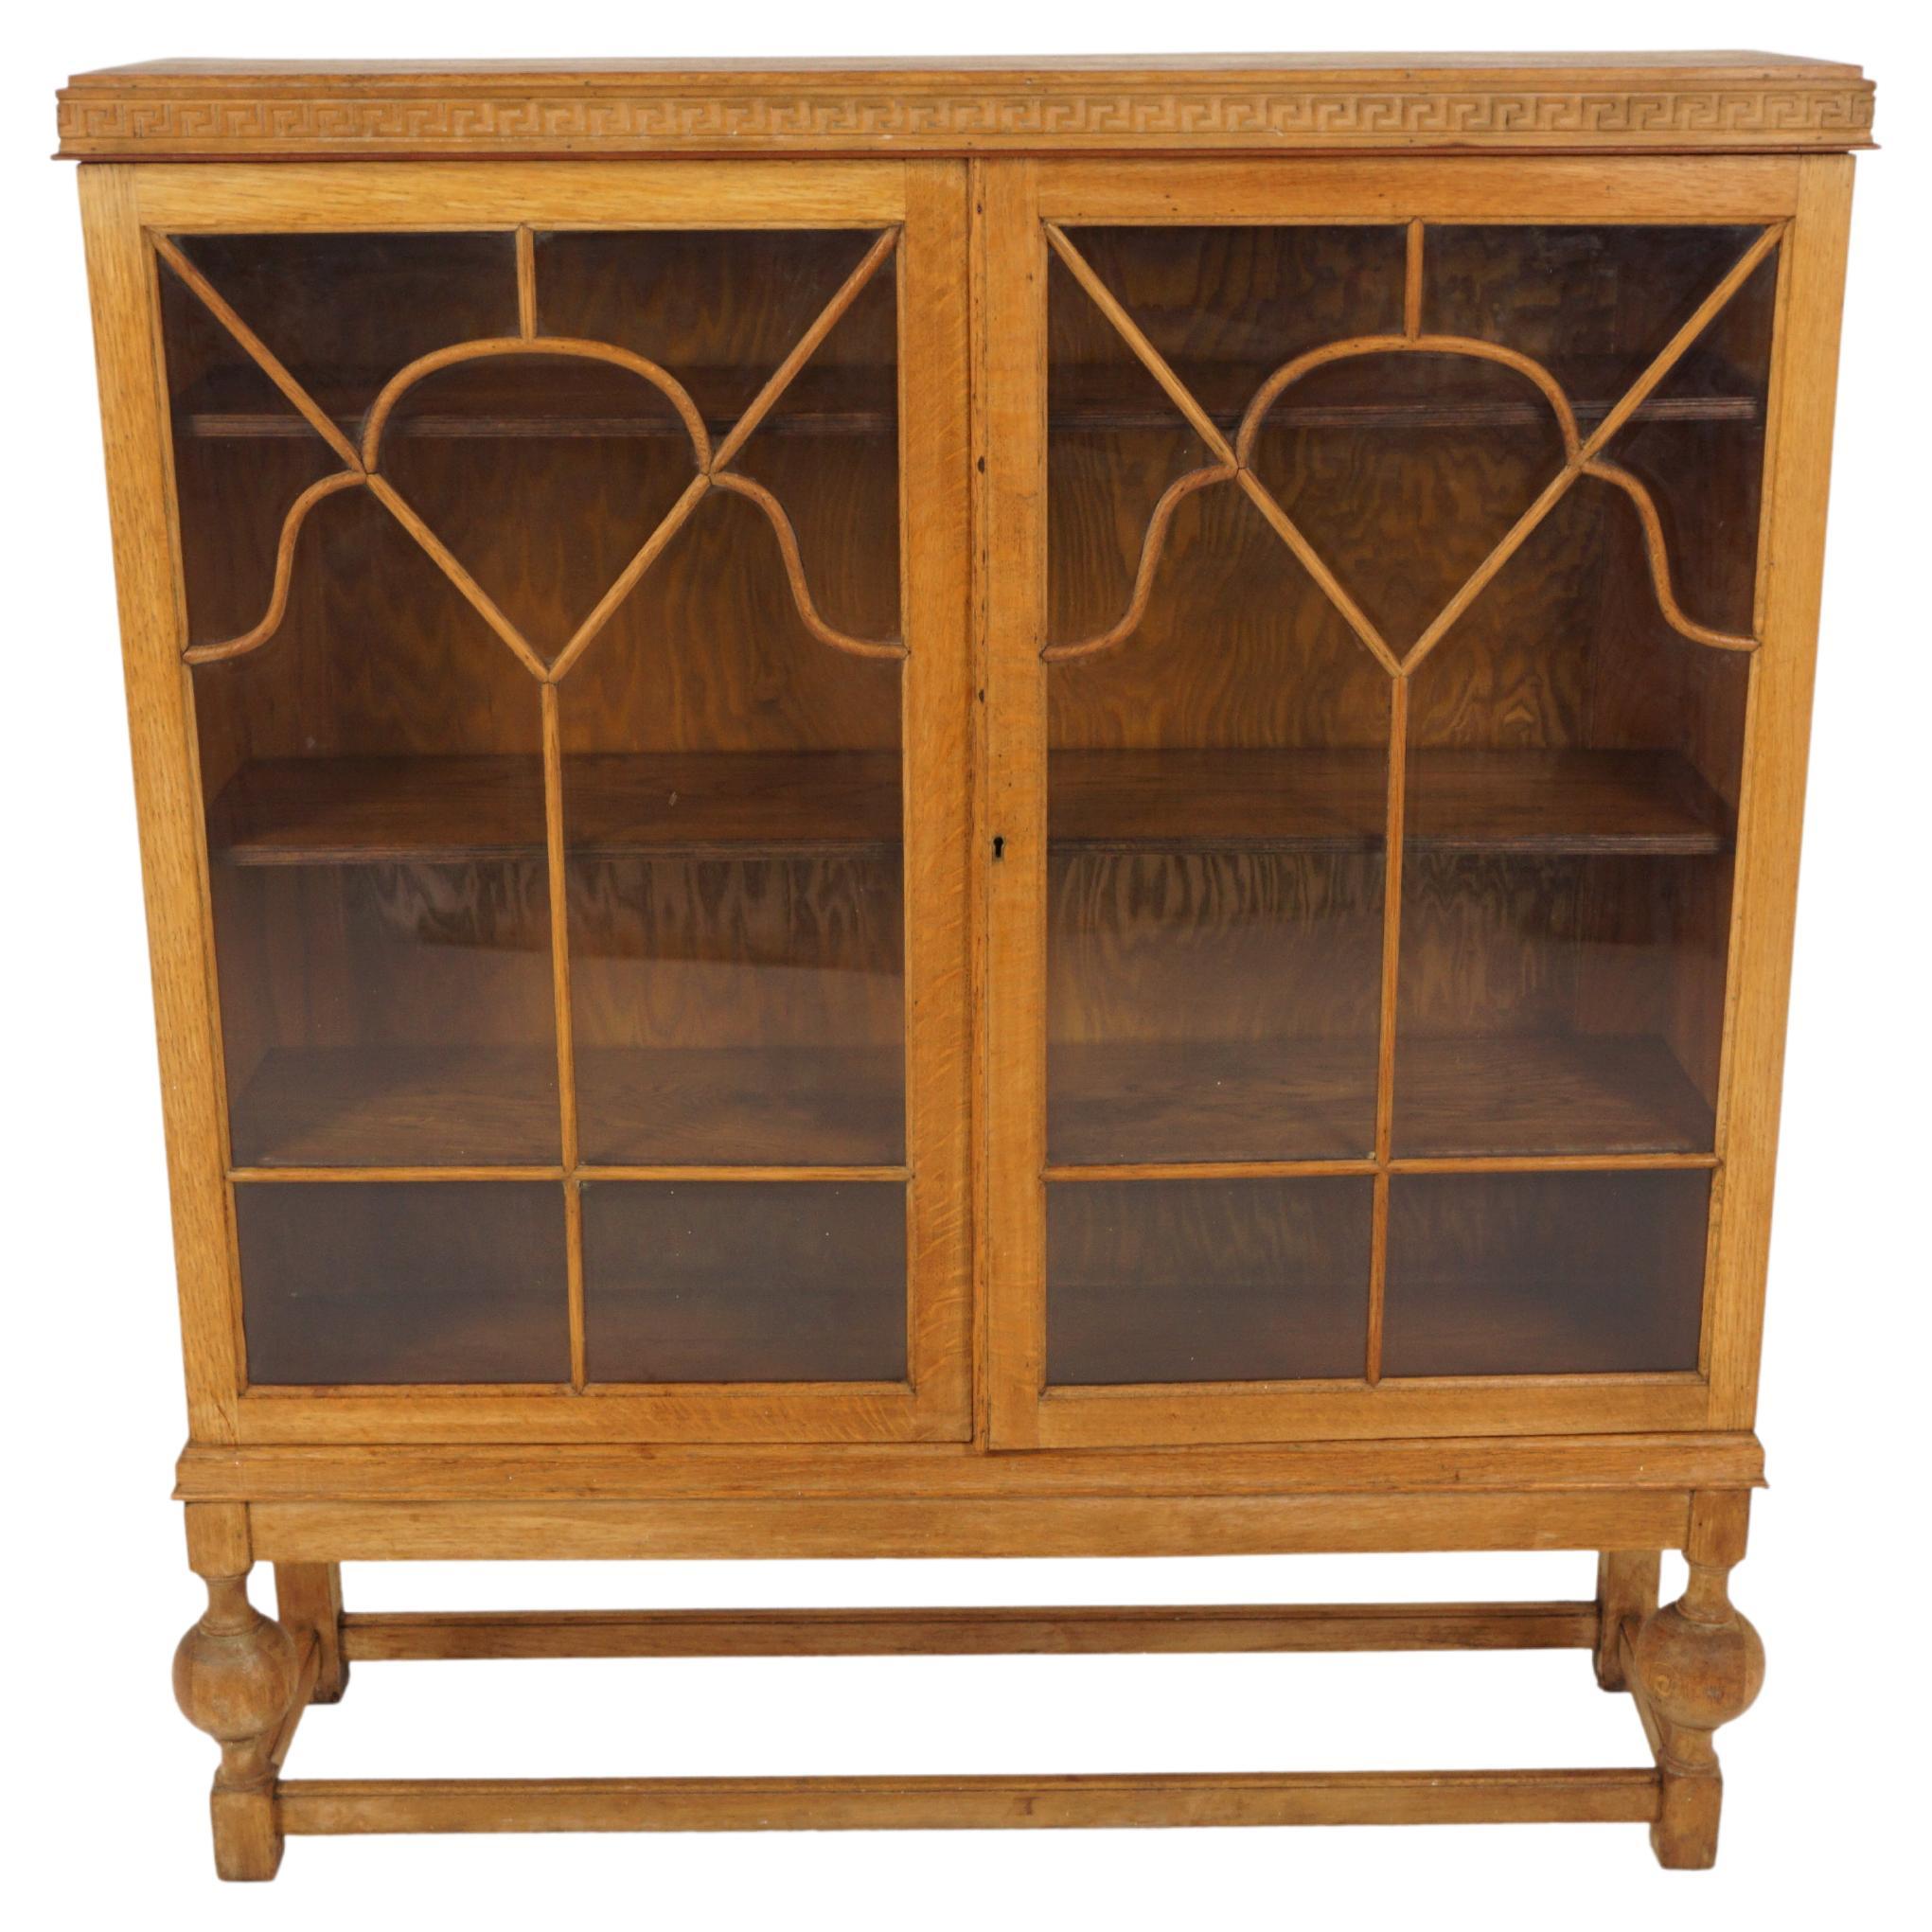 Antique Display Cabinet, Golden Tiger Oak, Bookcase, Scotland 1920, B2605